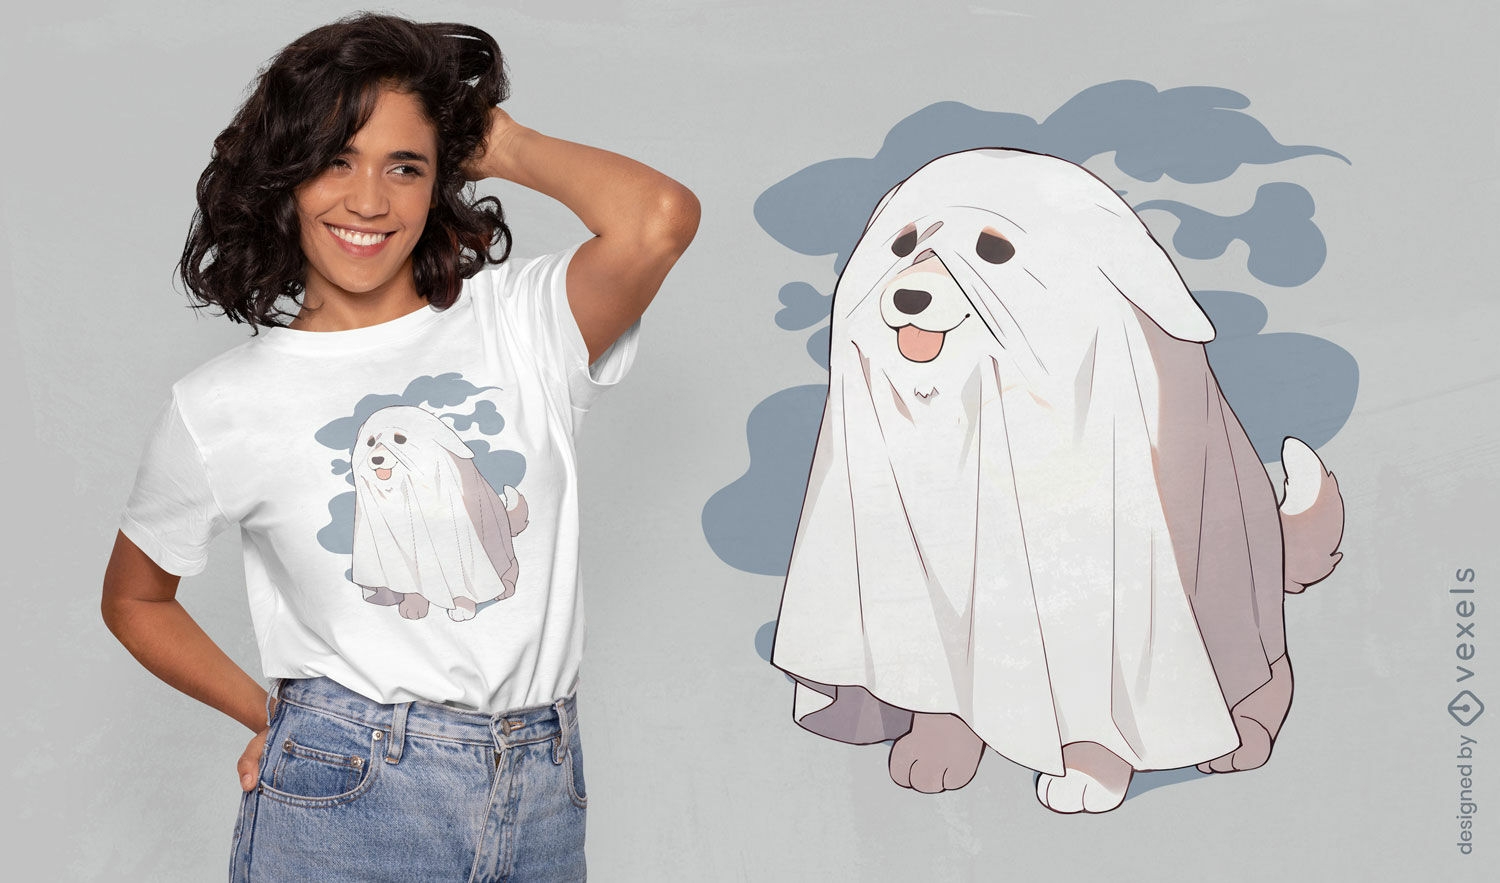 Dise?o de camiseta de disfraz de perro fantasma.